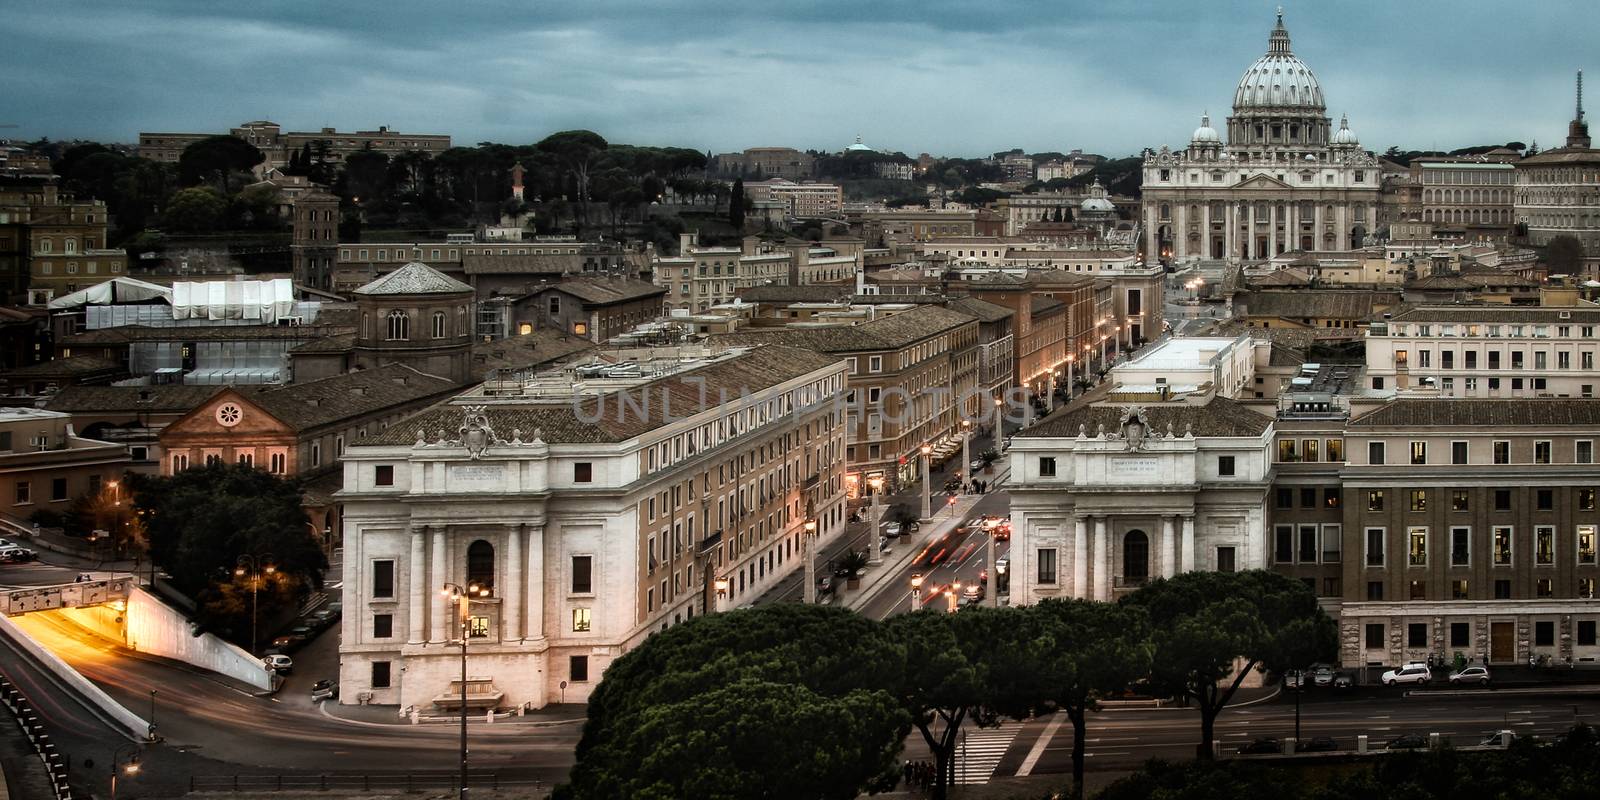 Cityscape in Rome by CelsoDiniz